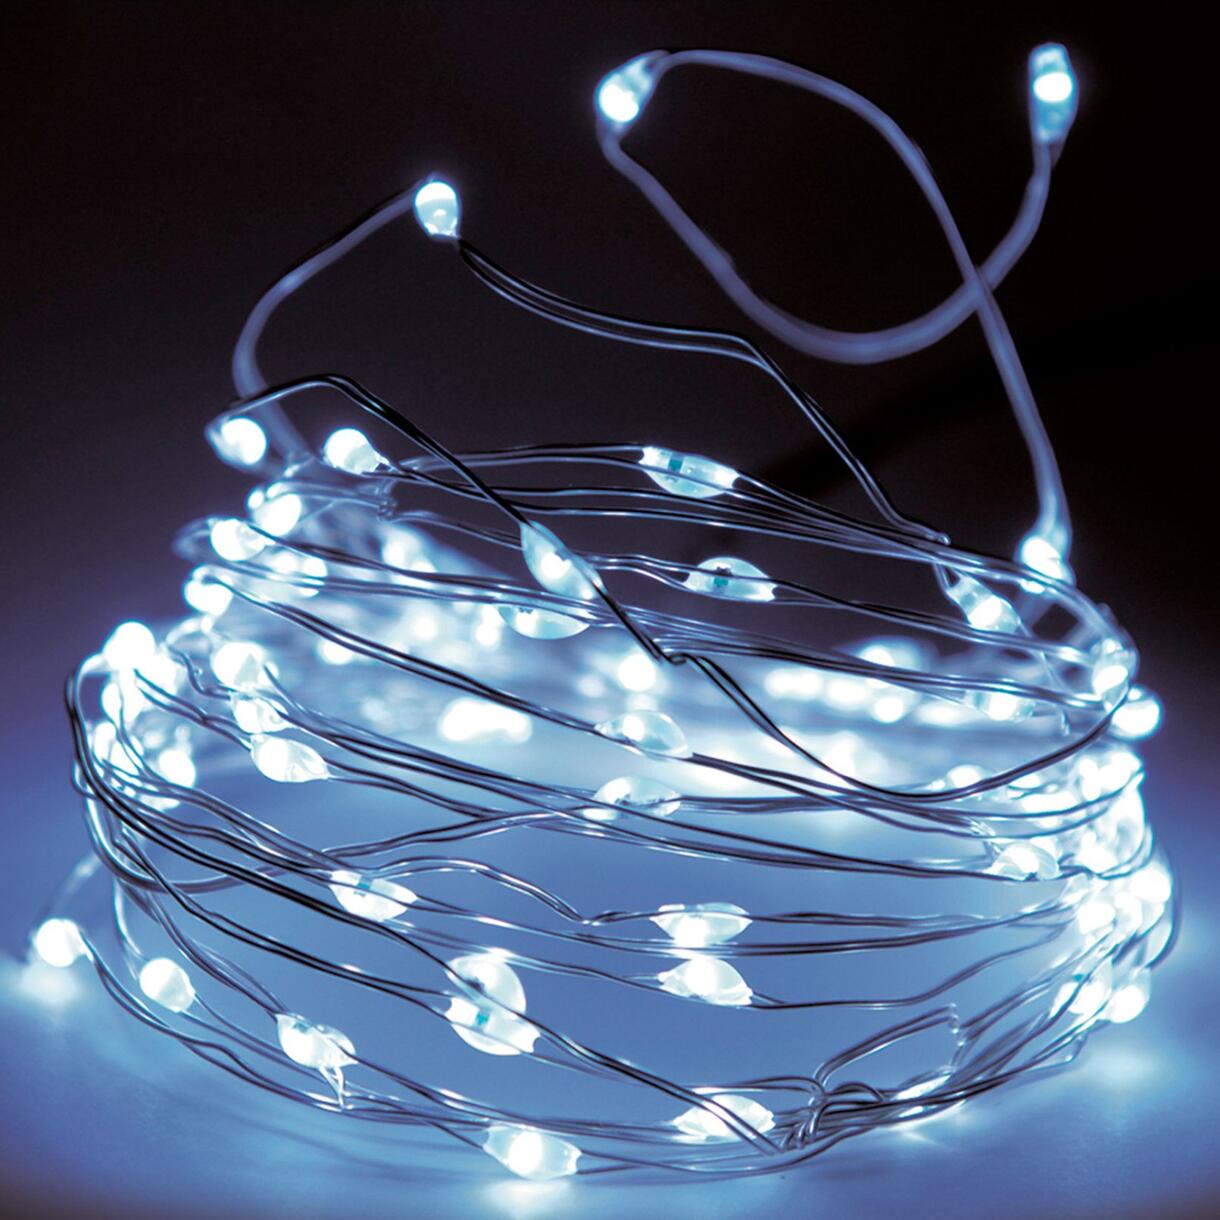 Ghirlanda luminosa Micro LED 11,90 m Bianco freddo 120 LED CT 1